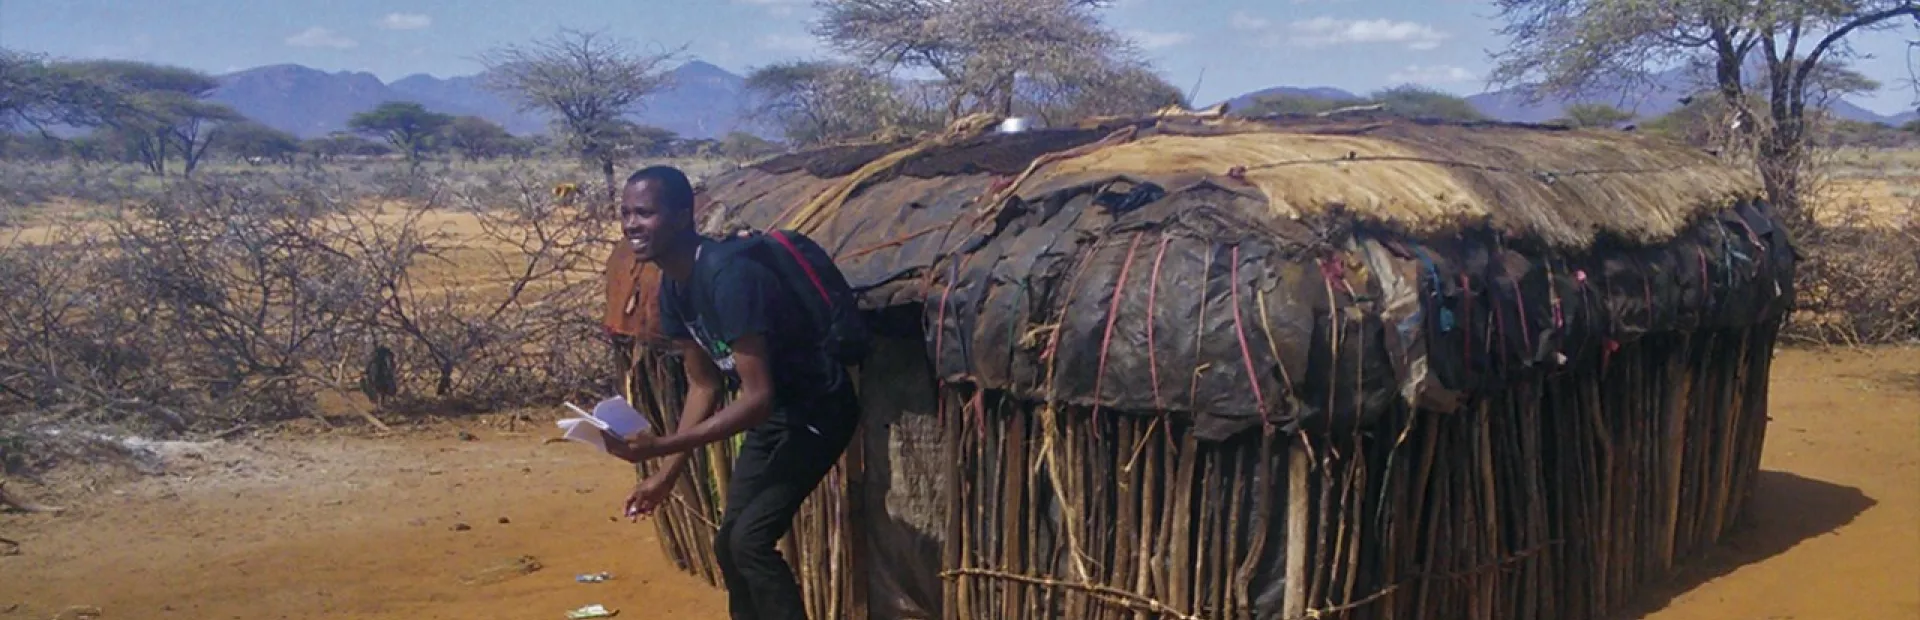 Investigator leaving a hut in Kenya